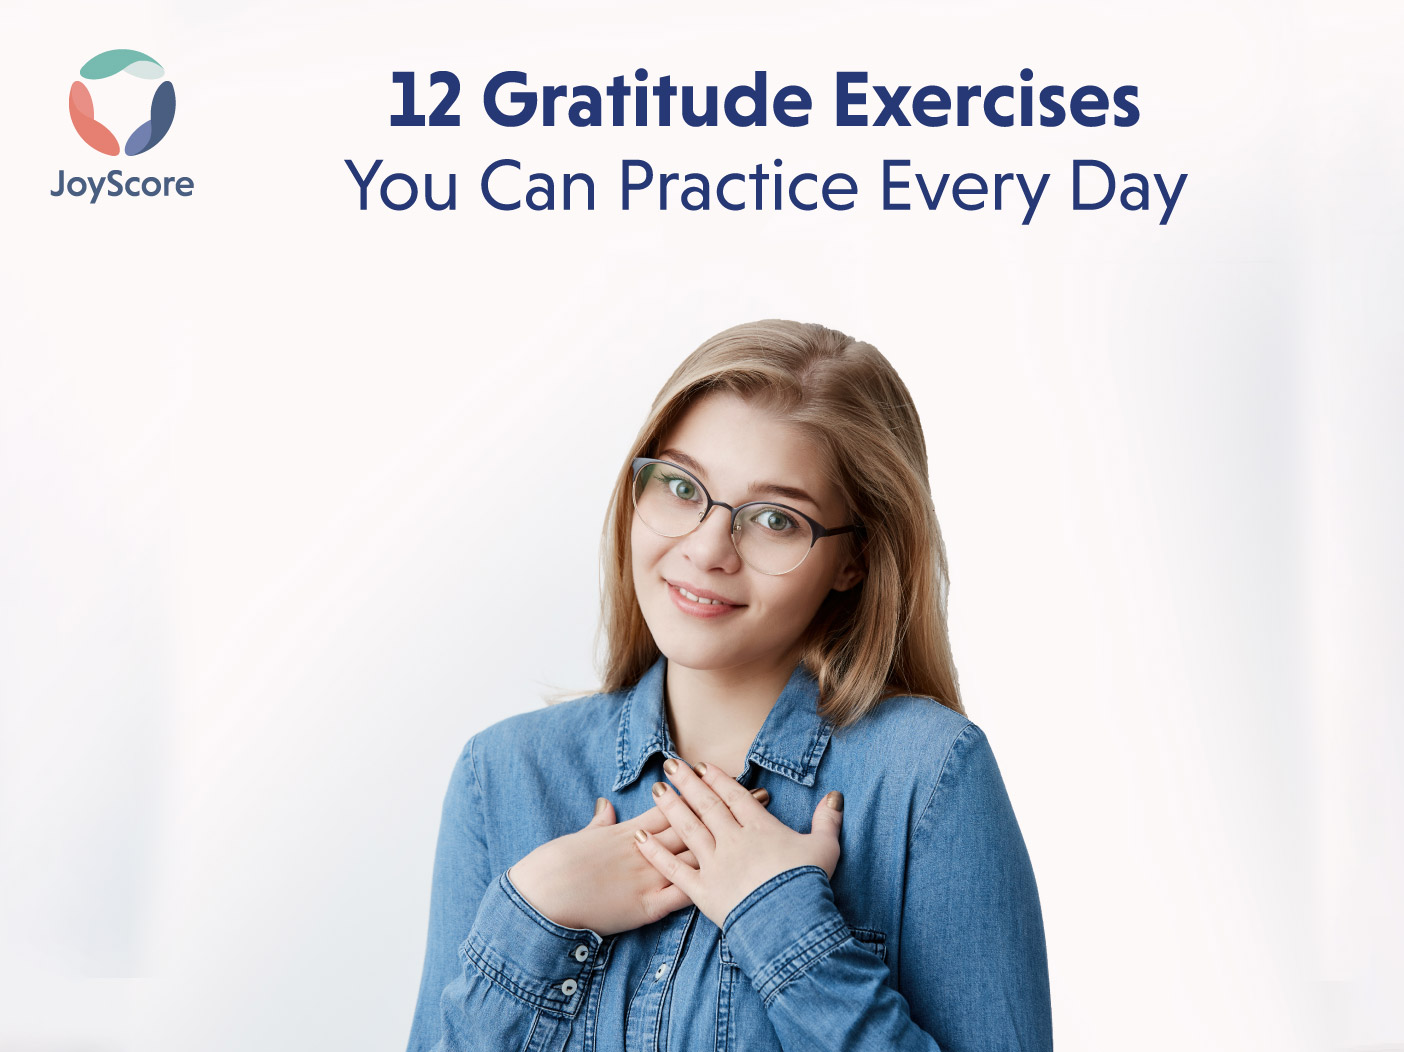 gratitude exercises